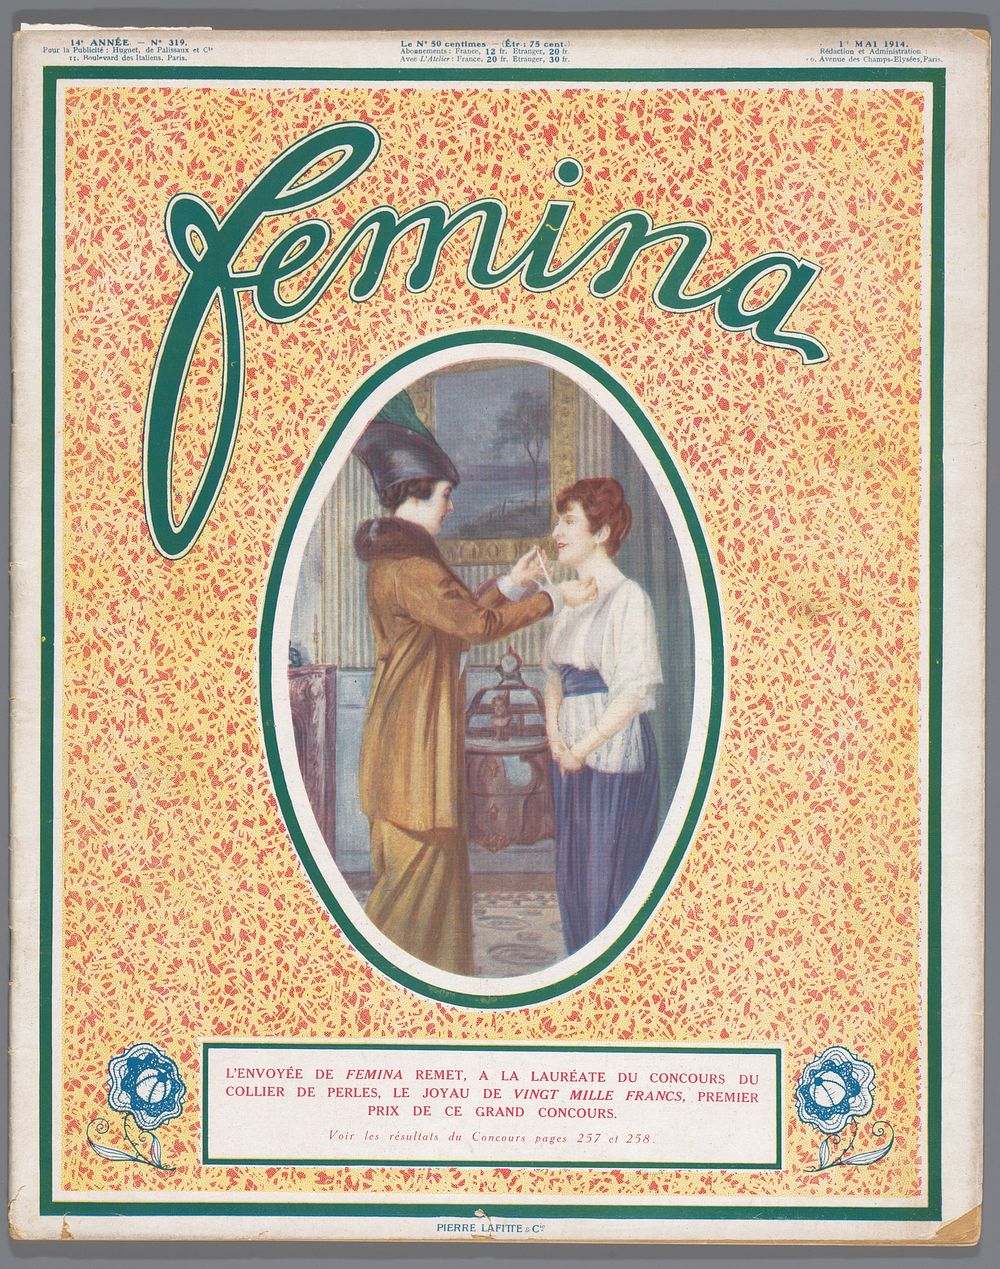 Femina, 1 Mai 1914, 14e Année, nr. 19 (1914) by Pierre Laffitte